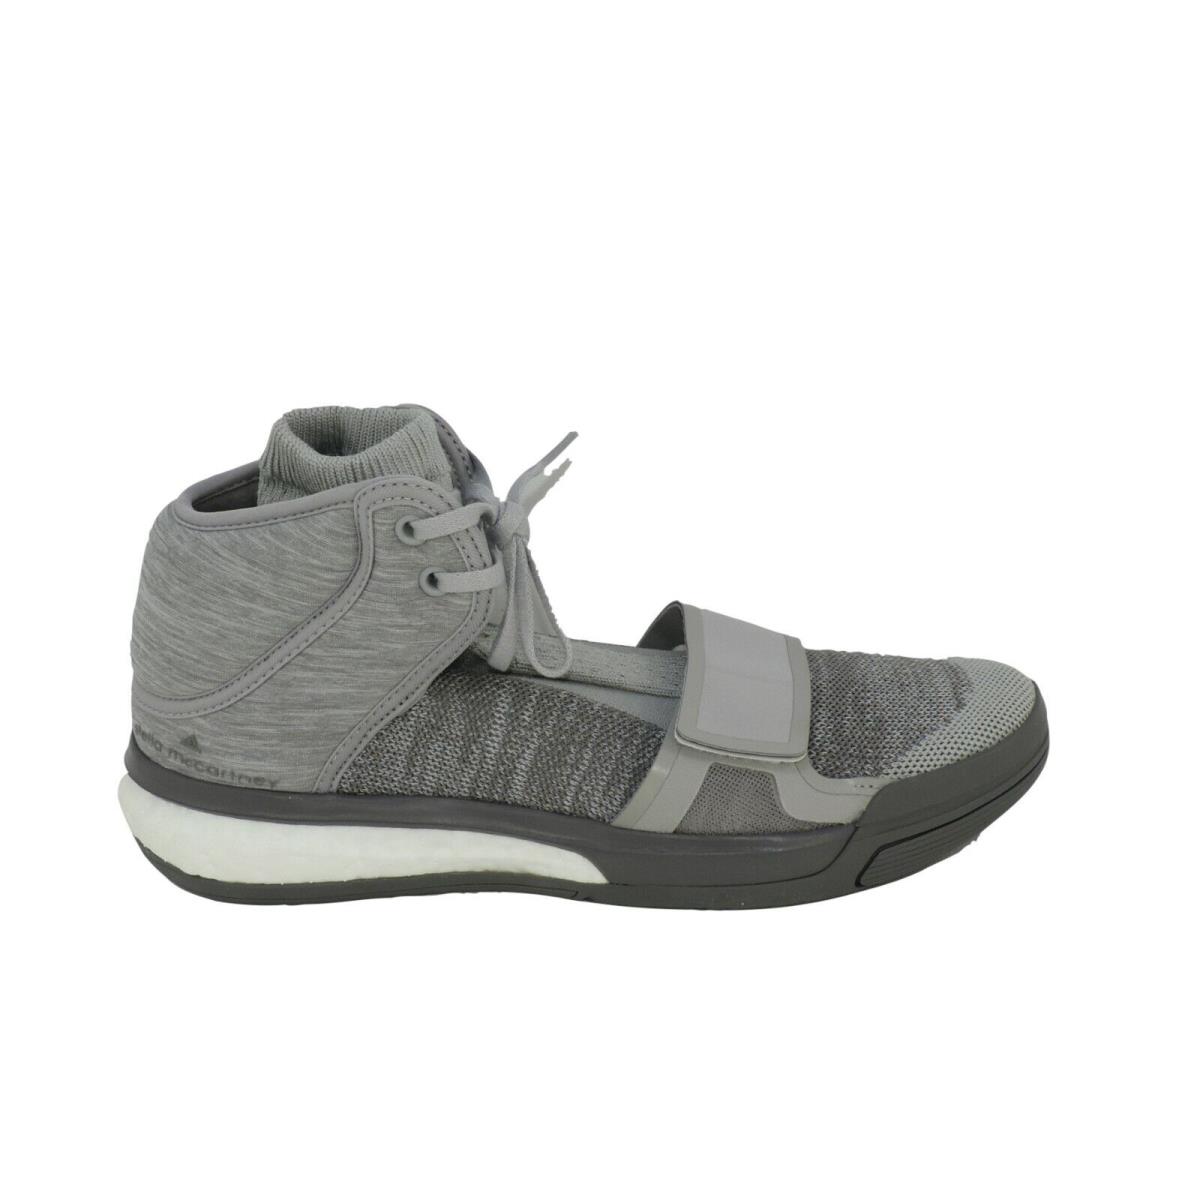 Adidas Asmc Boost Vibe AF6441 Womens Shoes Fabric Sport Rare SZ 10.5